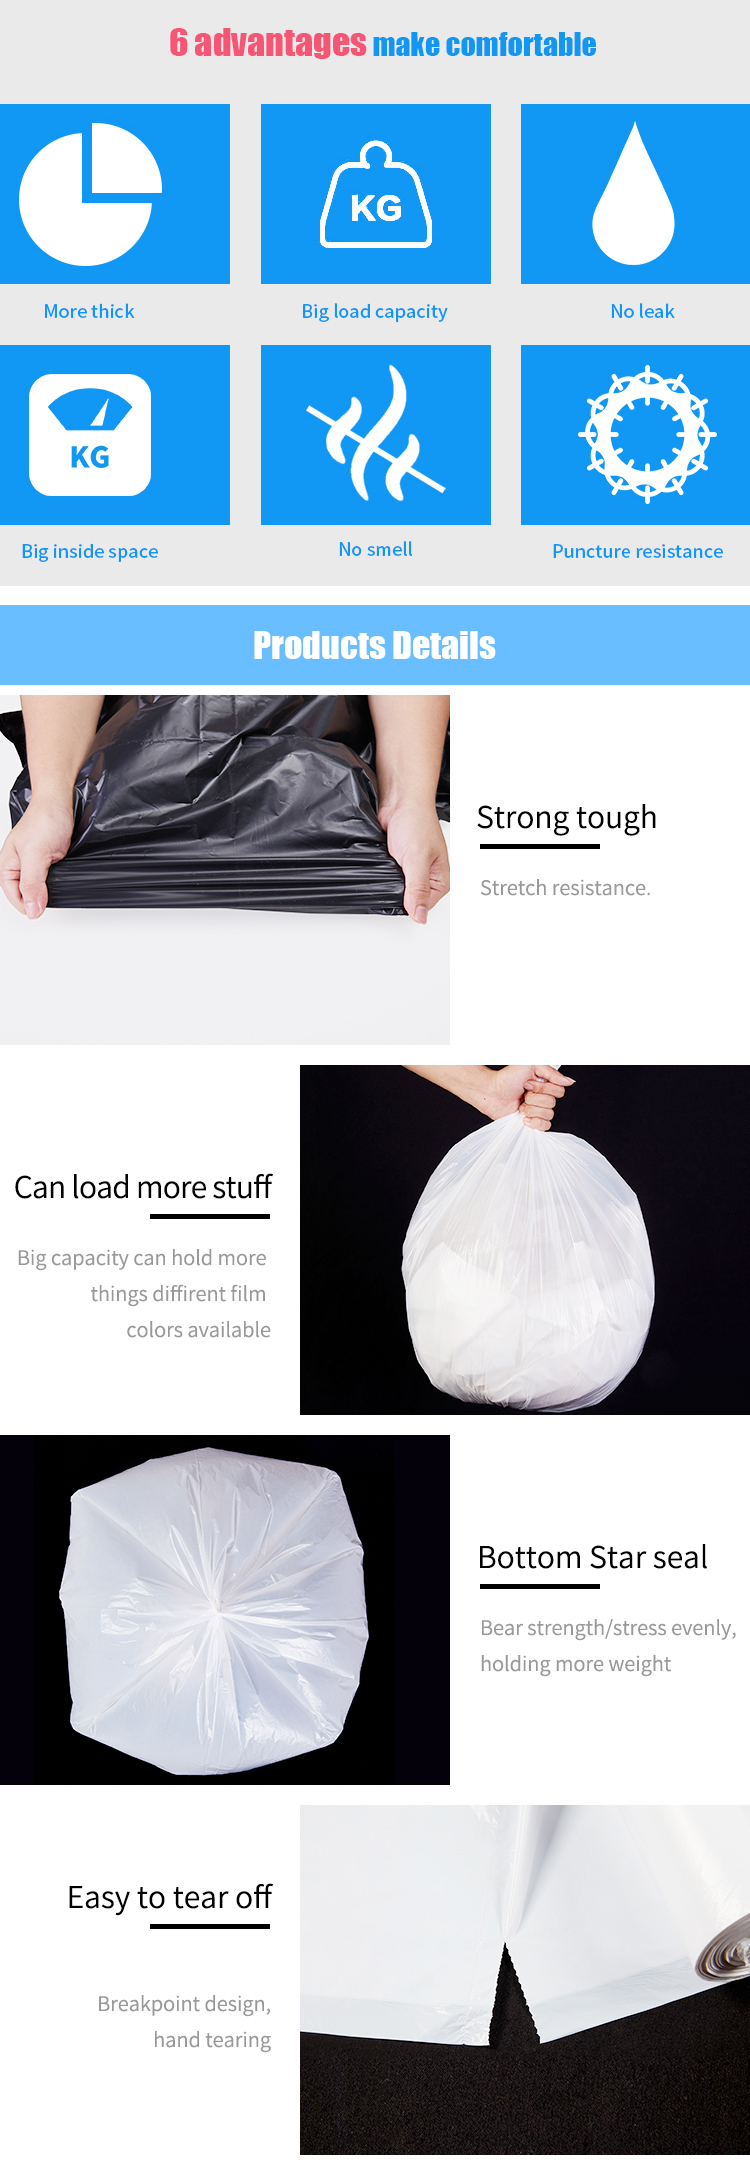 Custom Logo Printed Biodegradable Poly Parcel Bag For Apparel Shipping